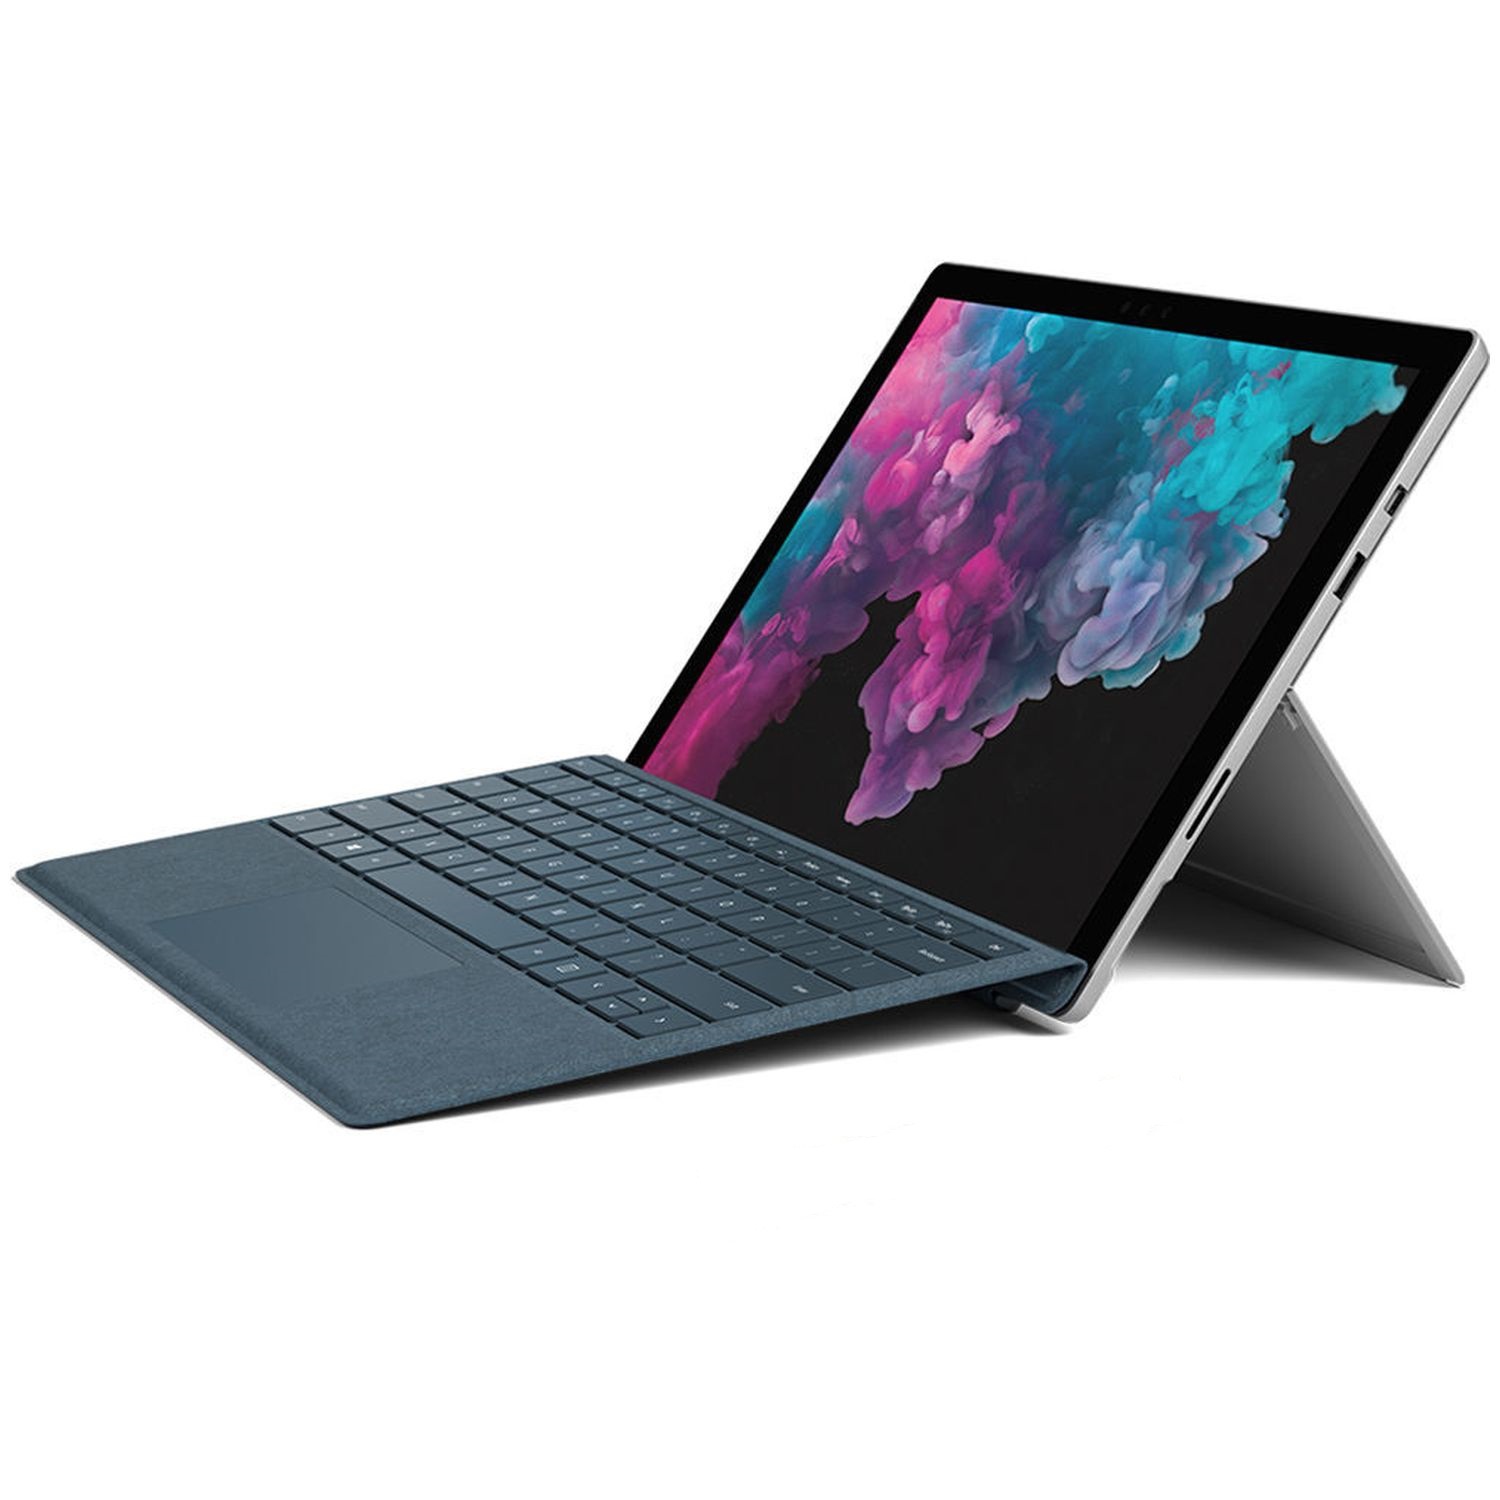 Refurbished (Good) - Microsoft Surface Pro 4, 12.3", Intel Core i5-6300U, 2.4GHz, 8GB Ram, 256GB SSD, with Free Keyboard, Windows 10 Pro.